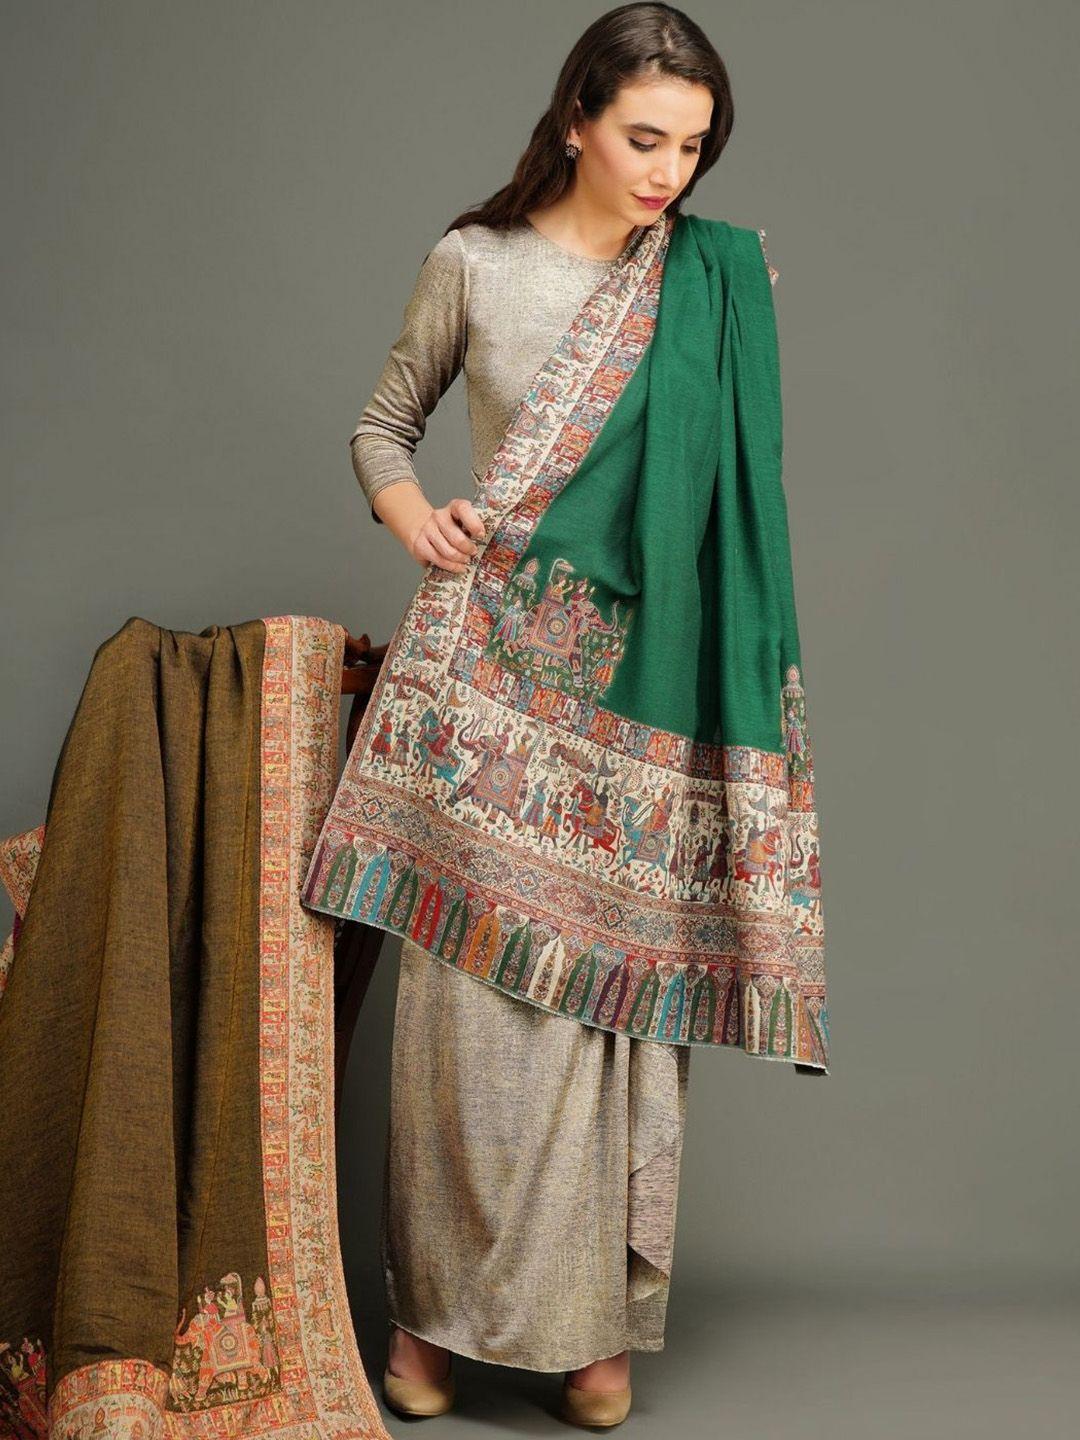 dusala india ethnic motifs woven design woolen shawl